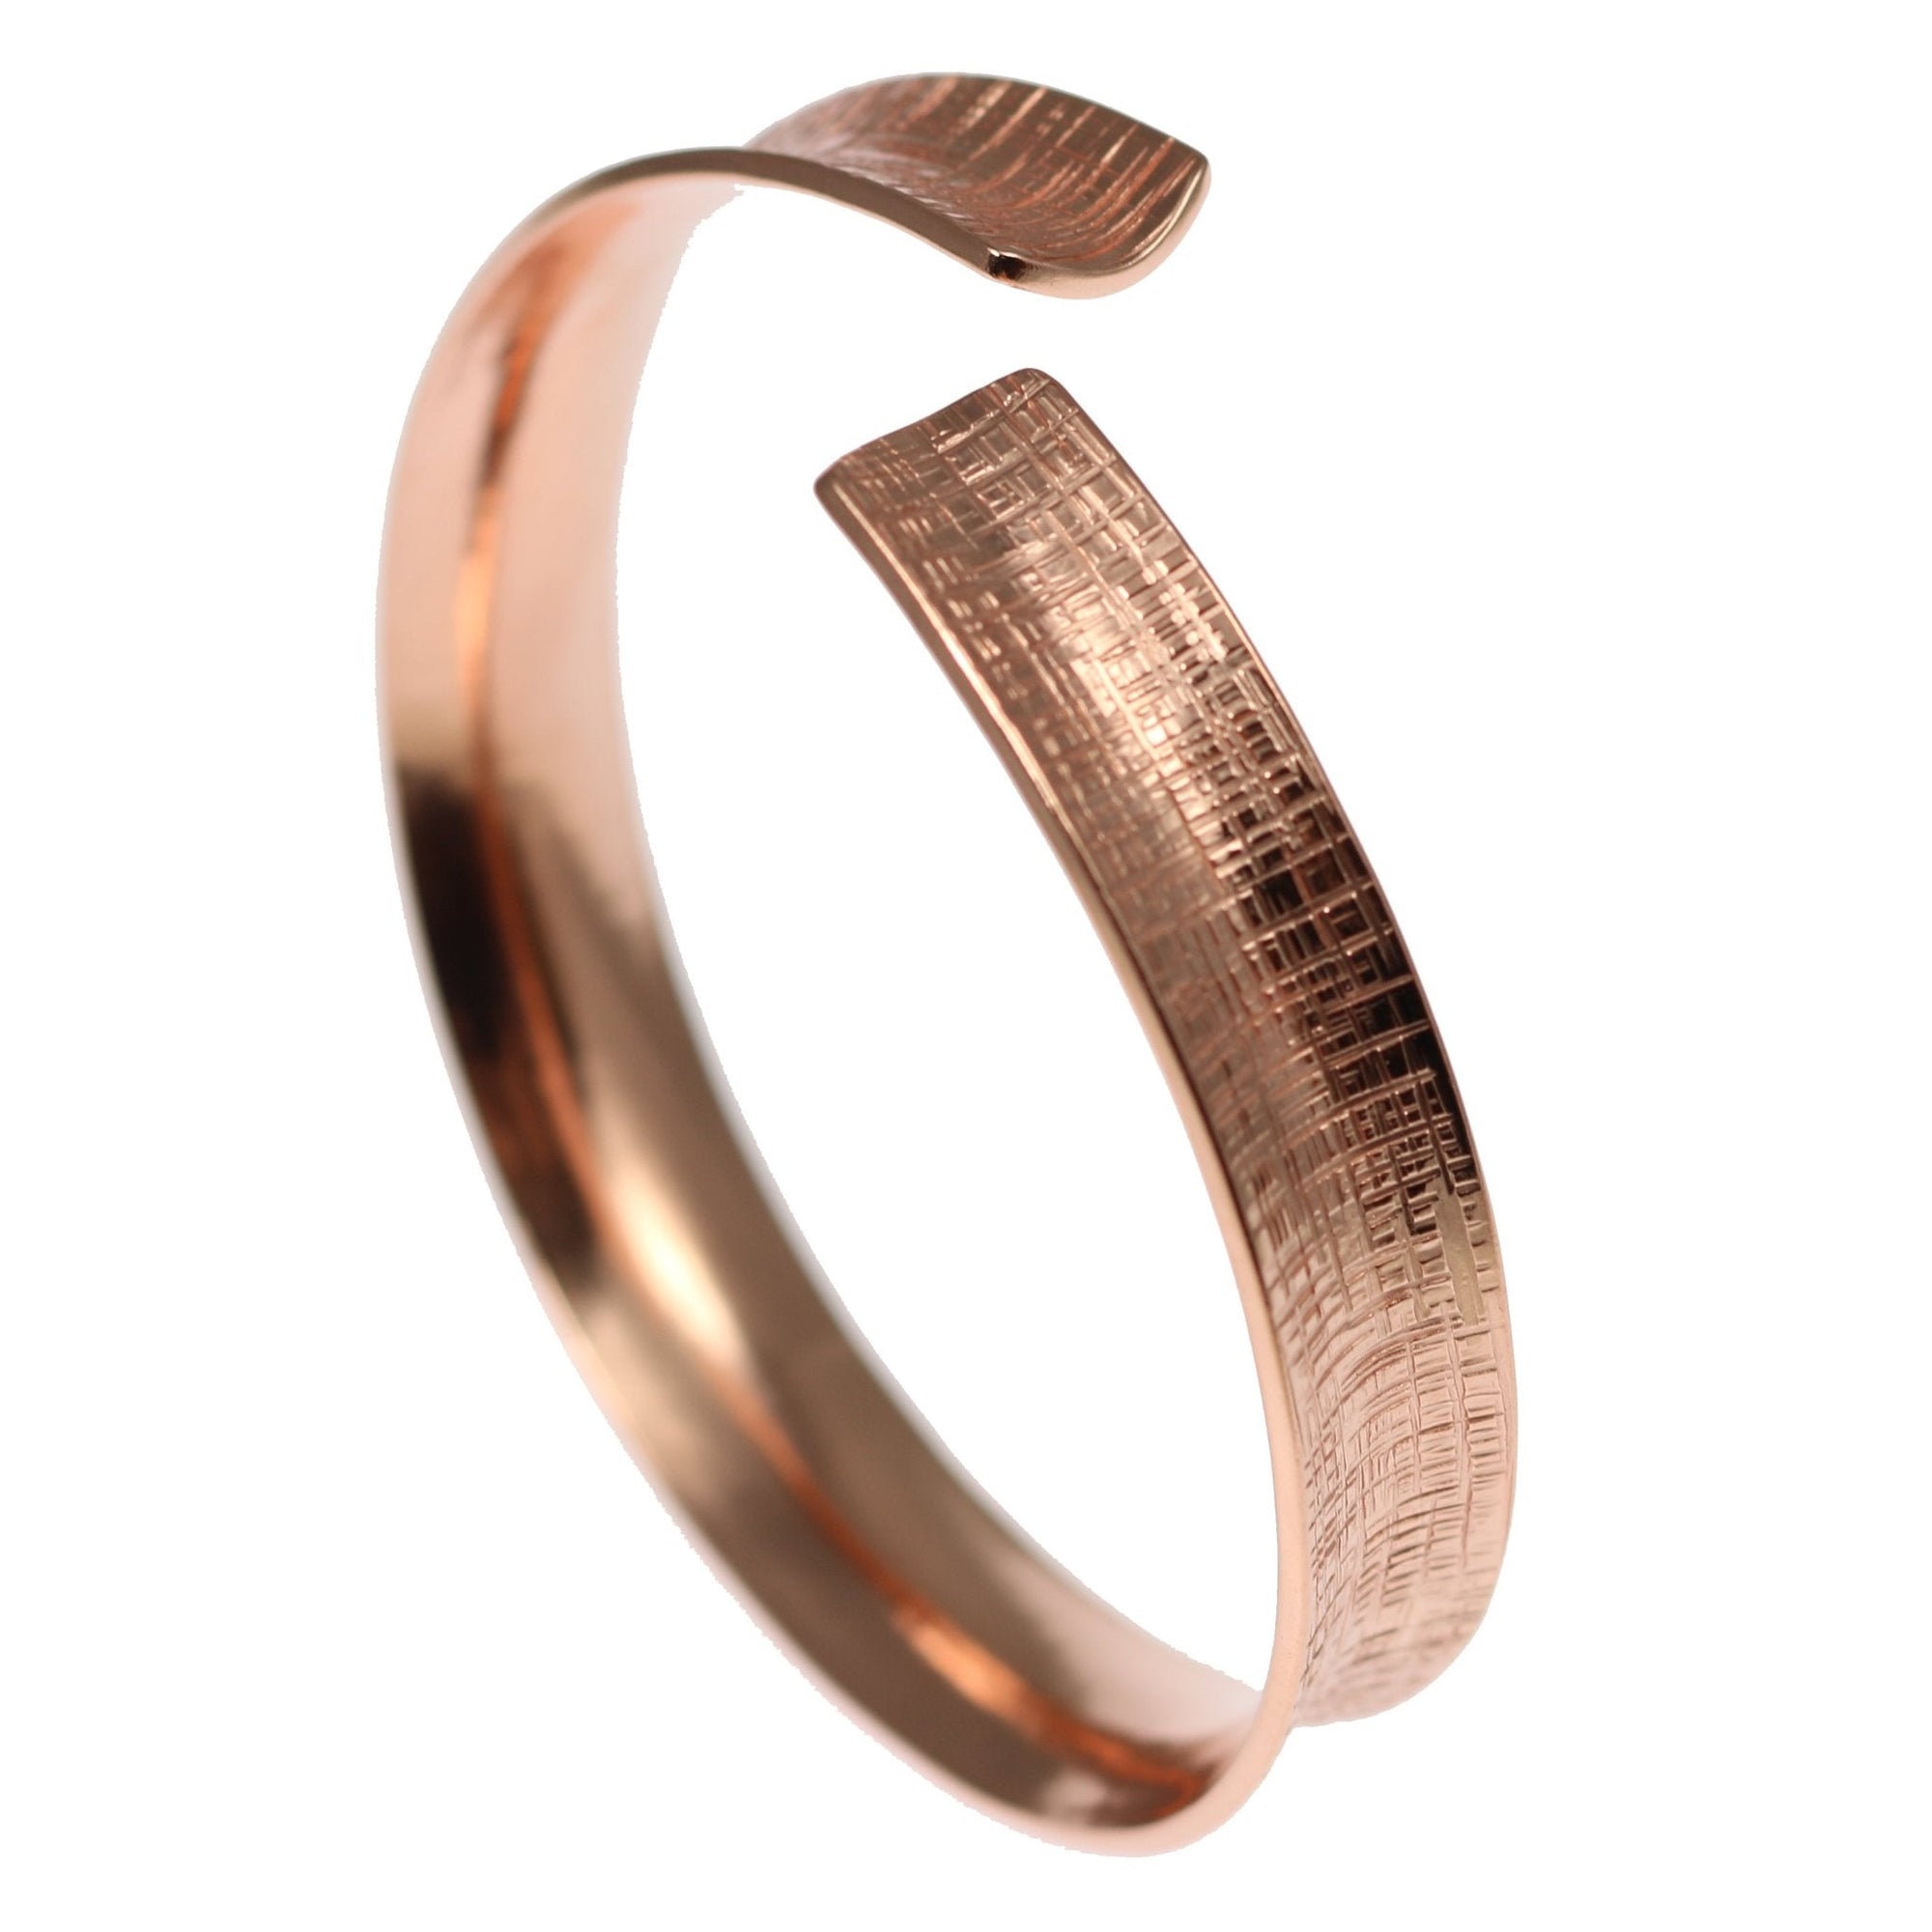 Detail View of Linen Anticlastic Copper Bangle Bracelet